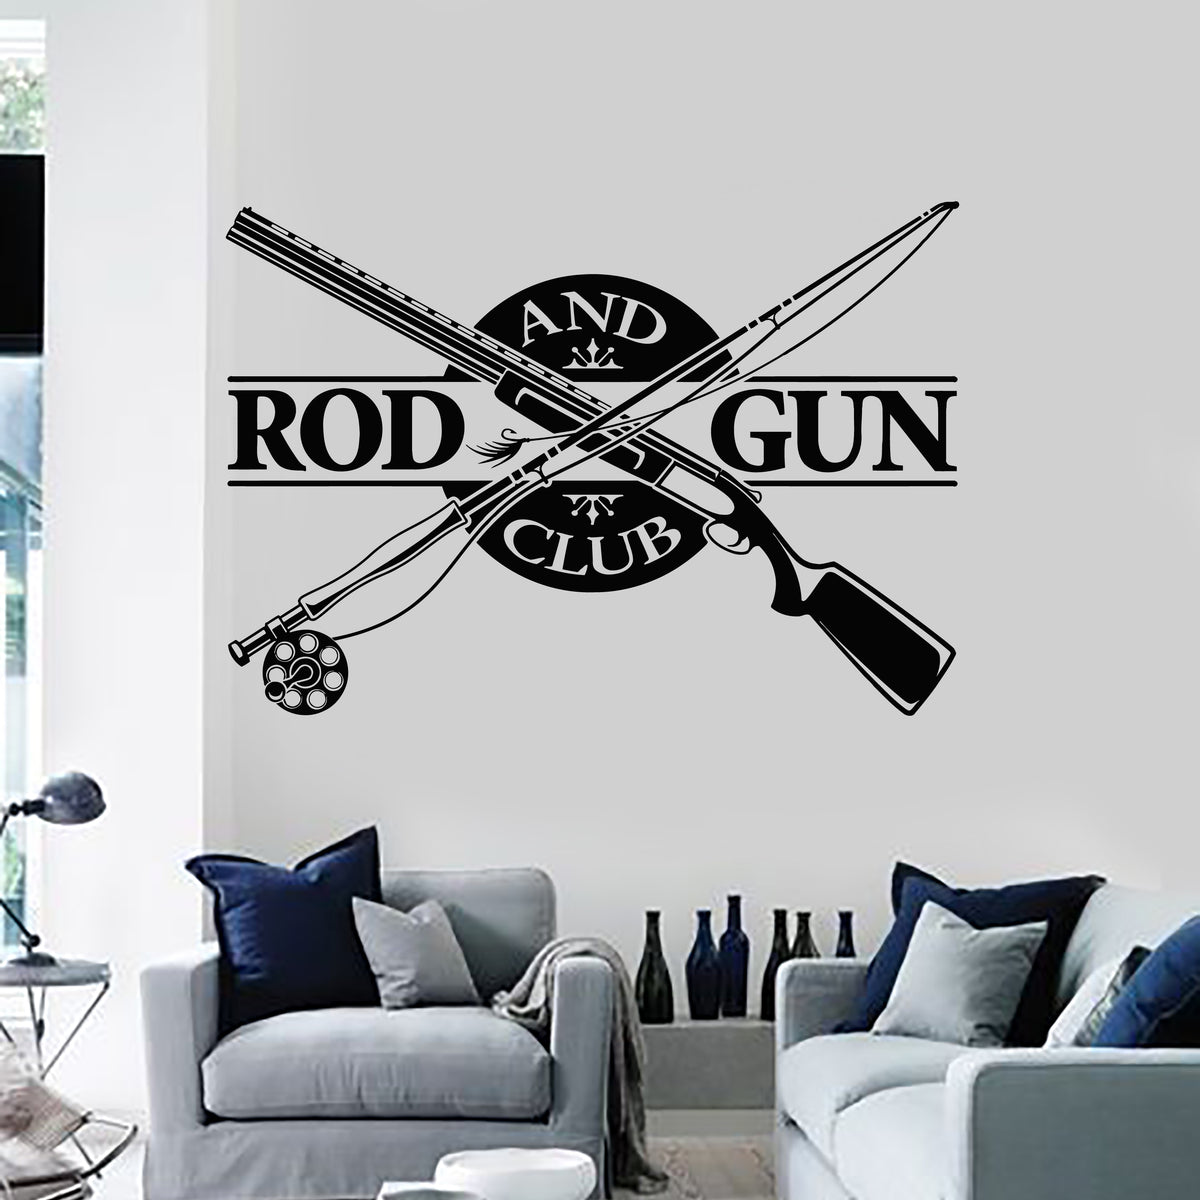 Vinyl Wall Decal Hunting Fishing Hobby Rod And Gun Club Stickers